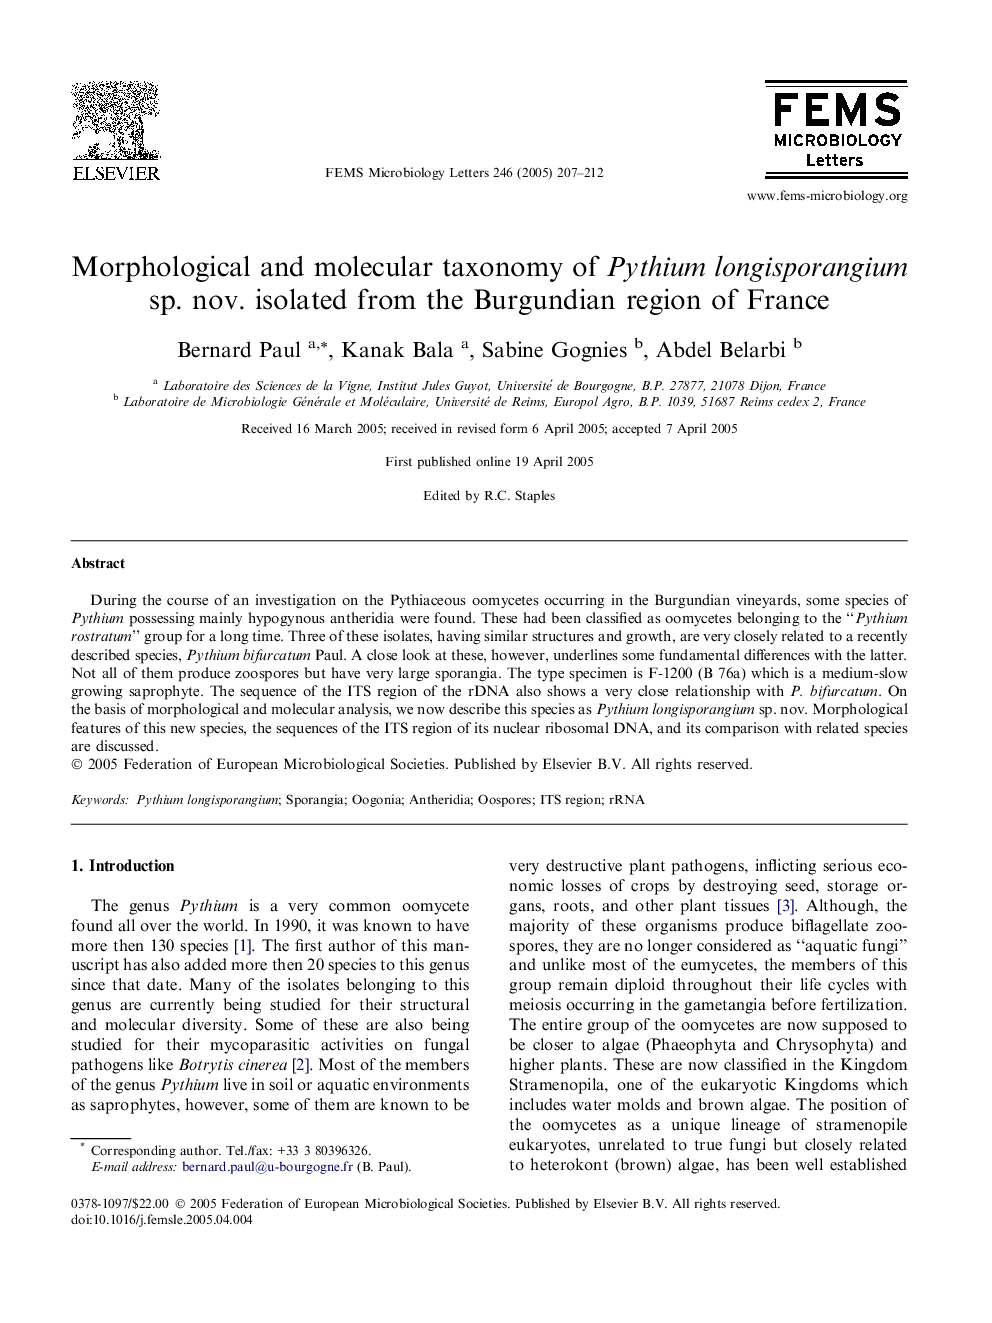 Morphological and molecular taxonomy of Pythium longisporangium sp. nov. isolated from the Burgundian region of France